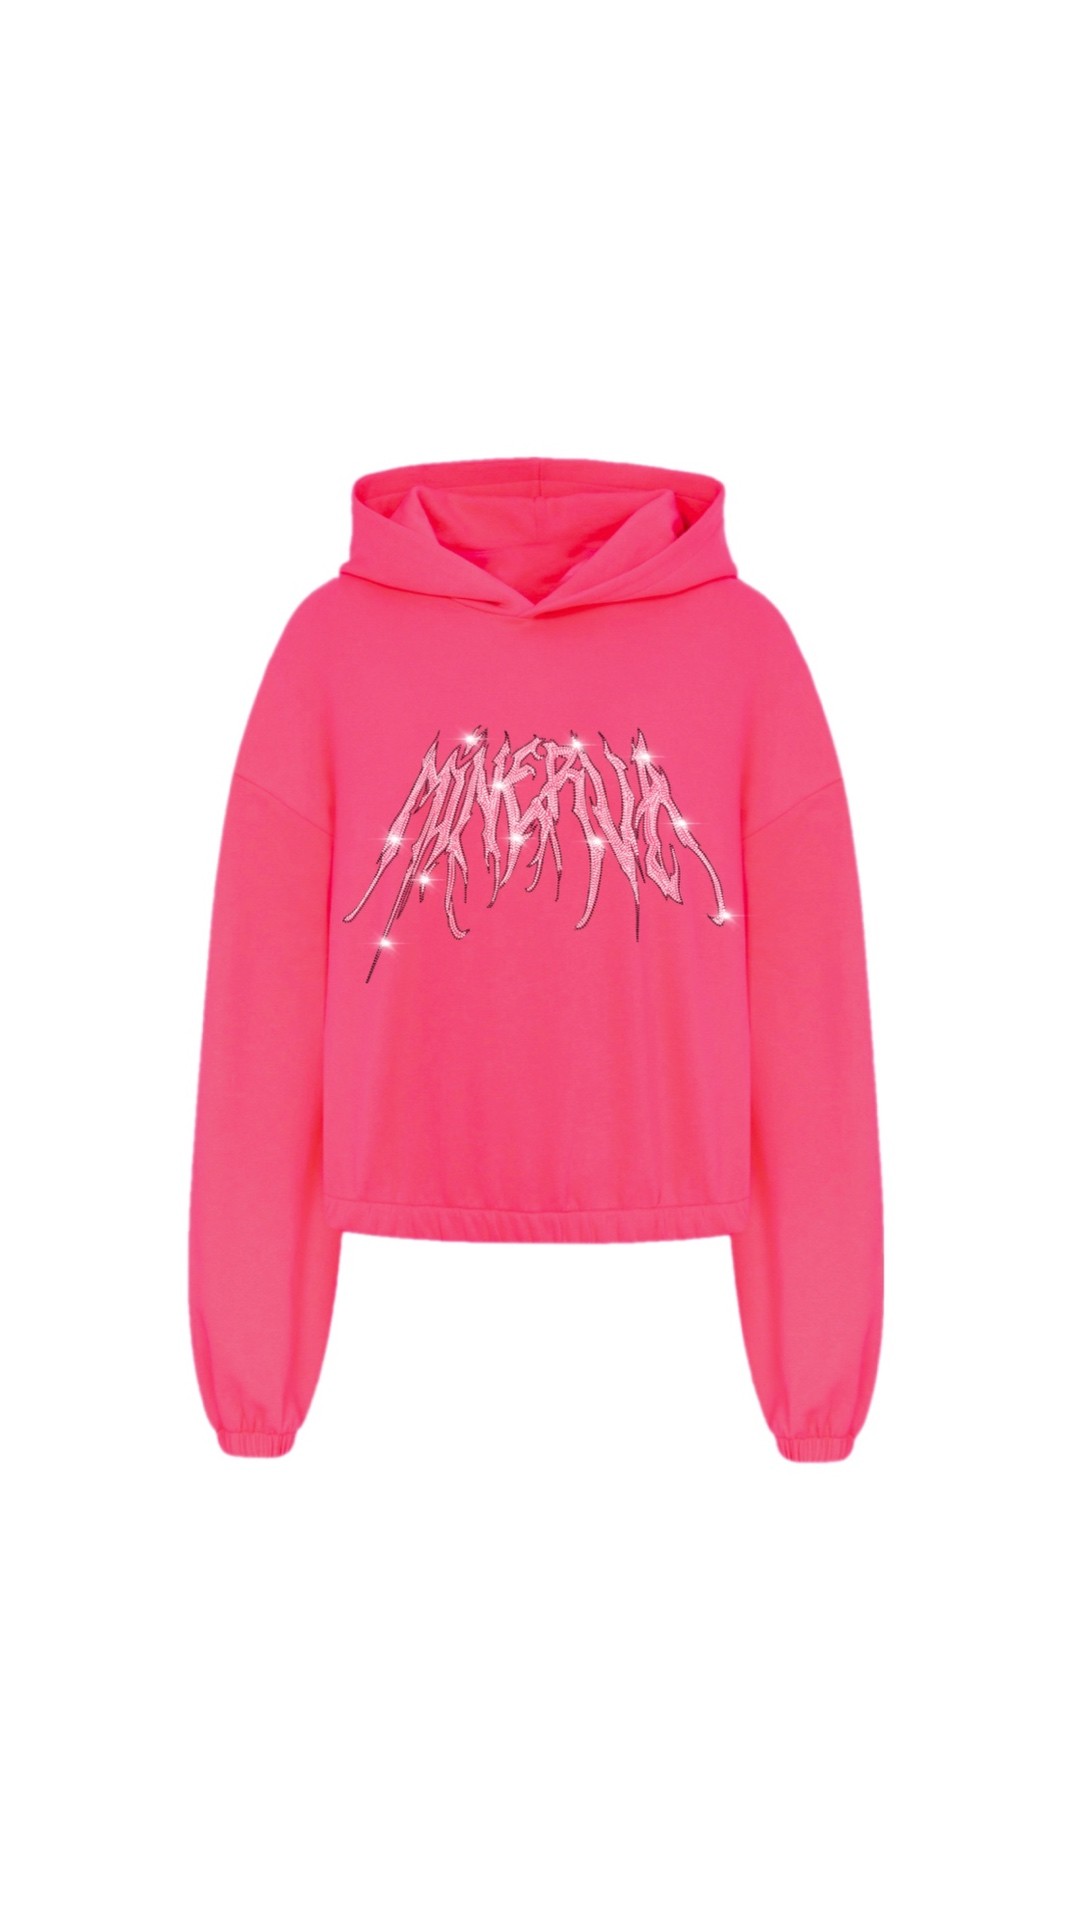 MINERVA rhinestone printed candy pink oversized hoodie